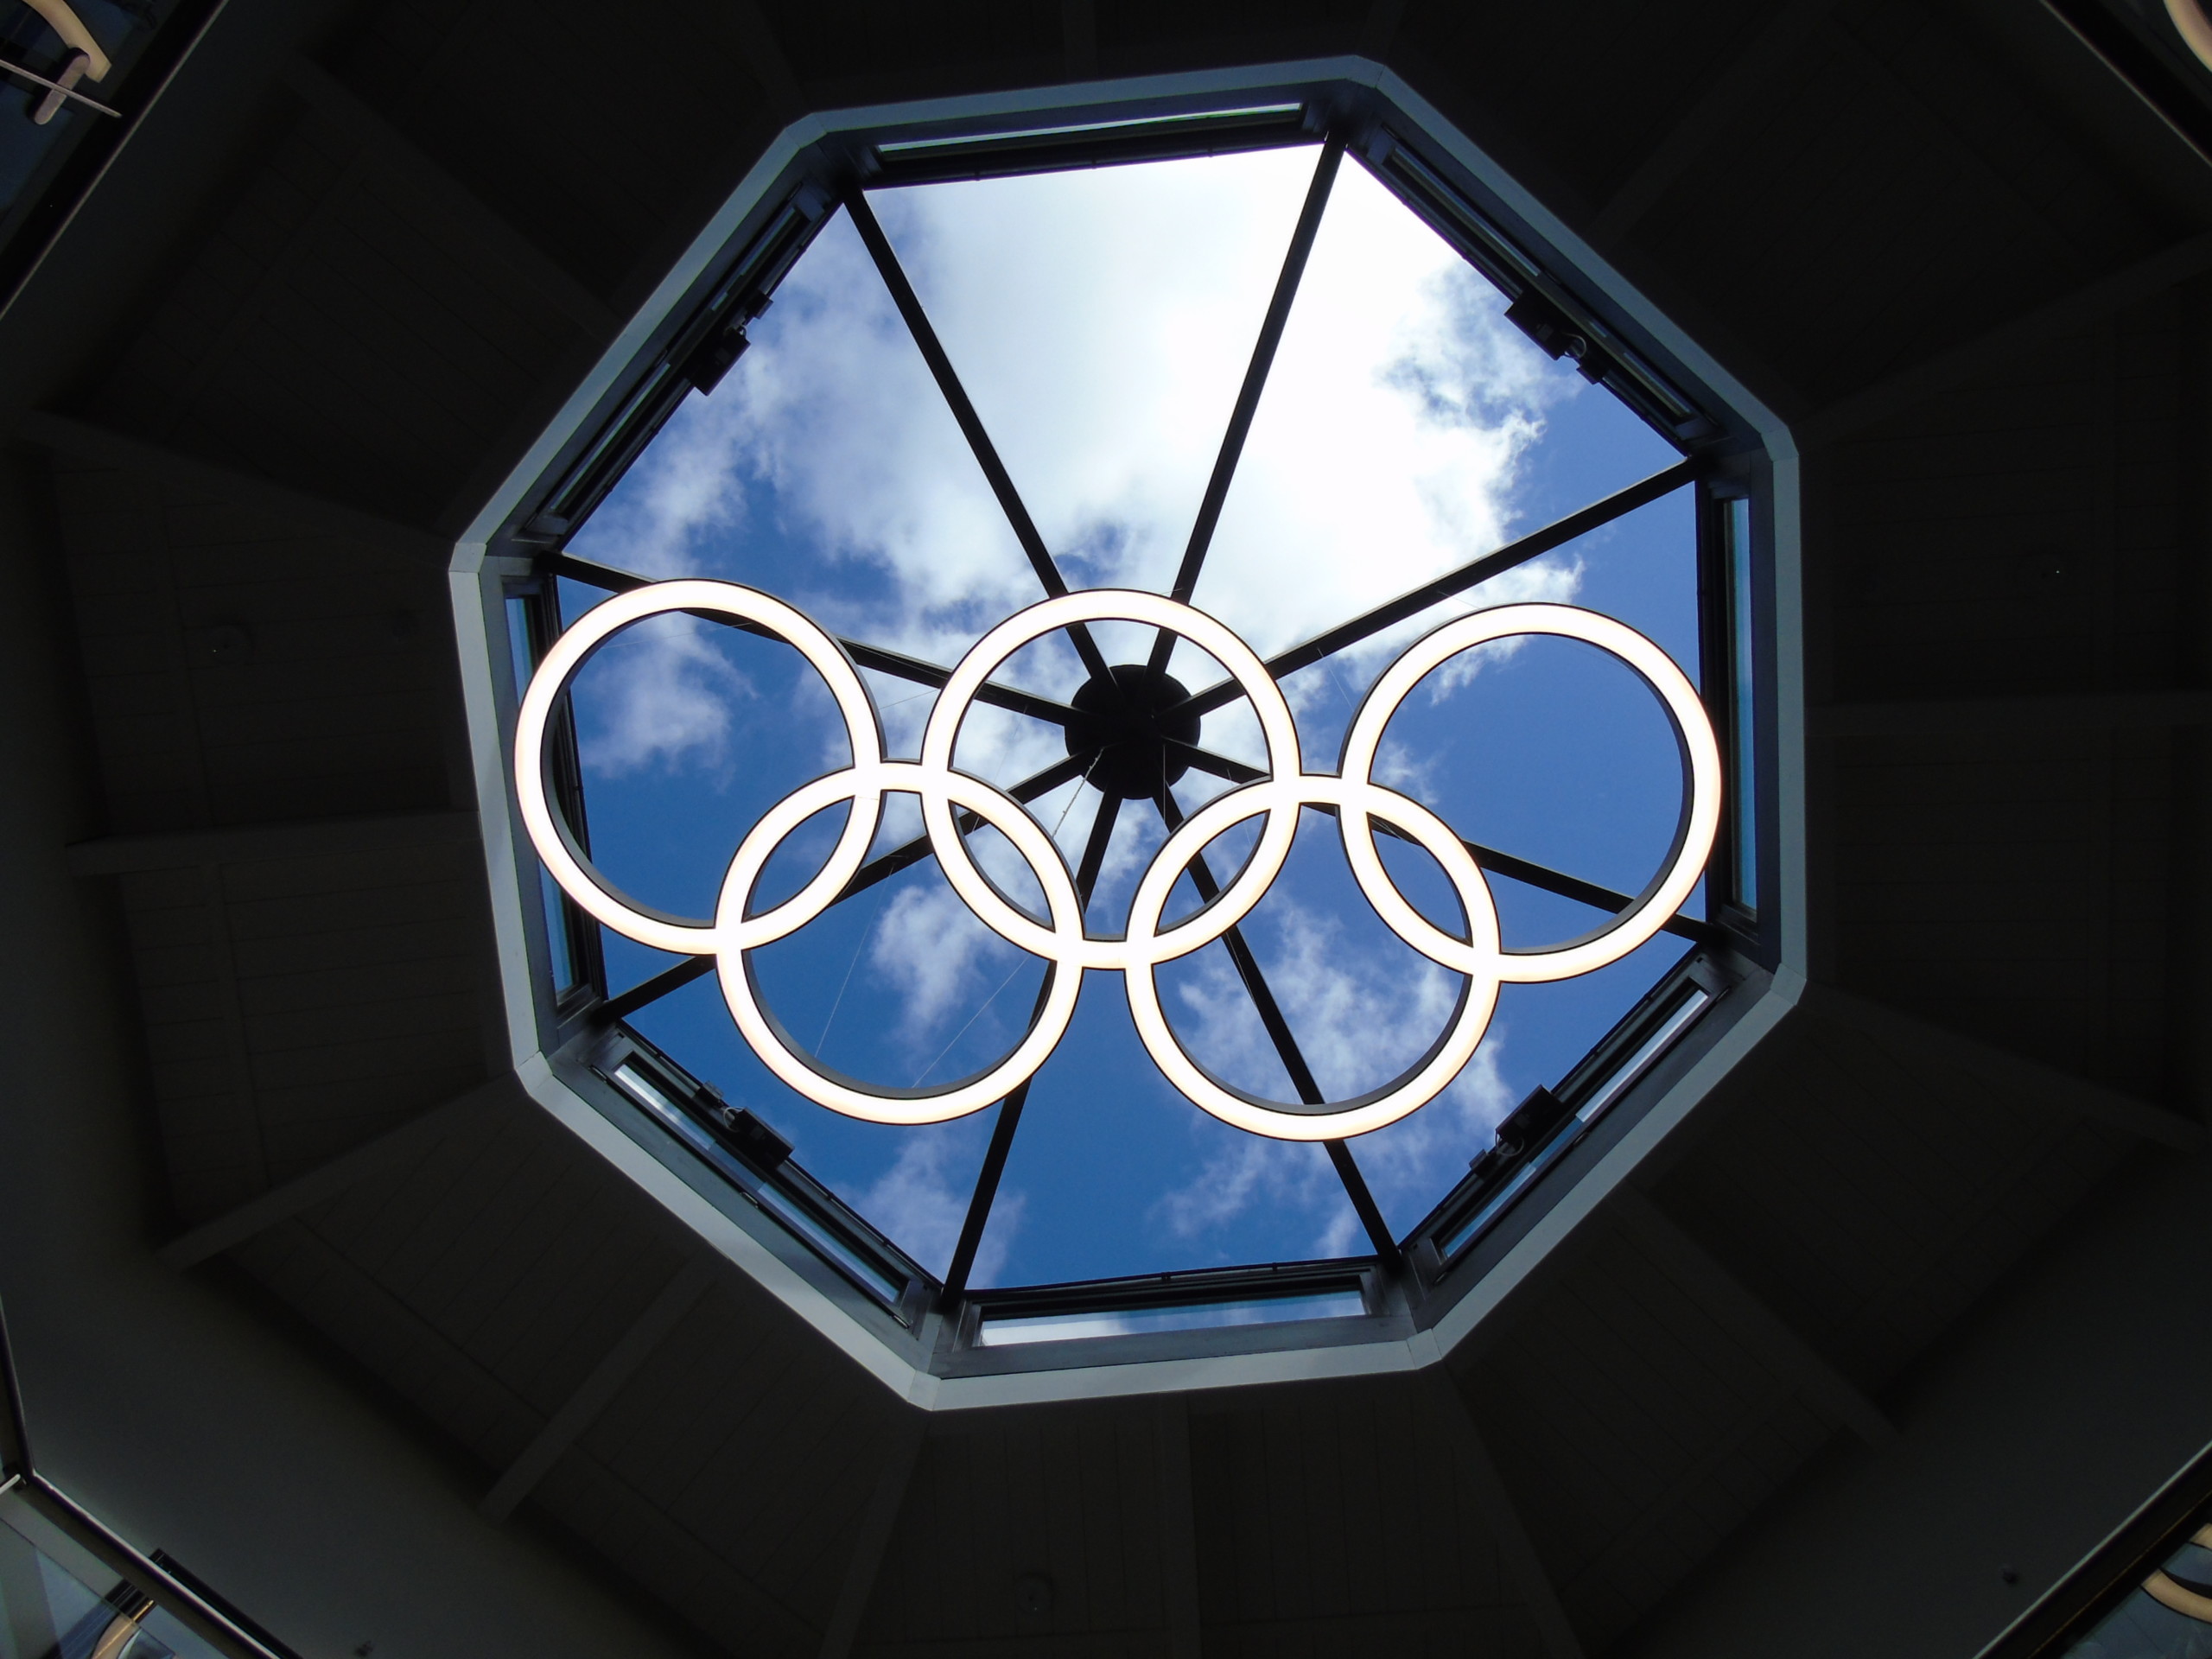 Olympic ring lights on ceiling spotlight